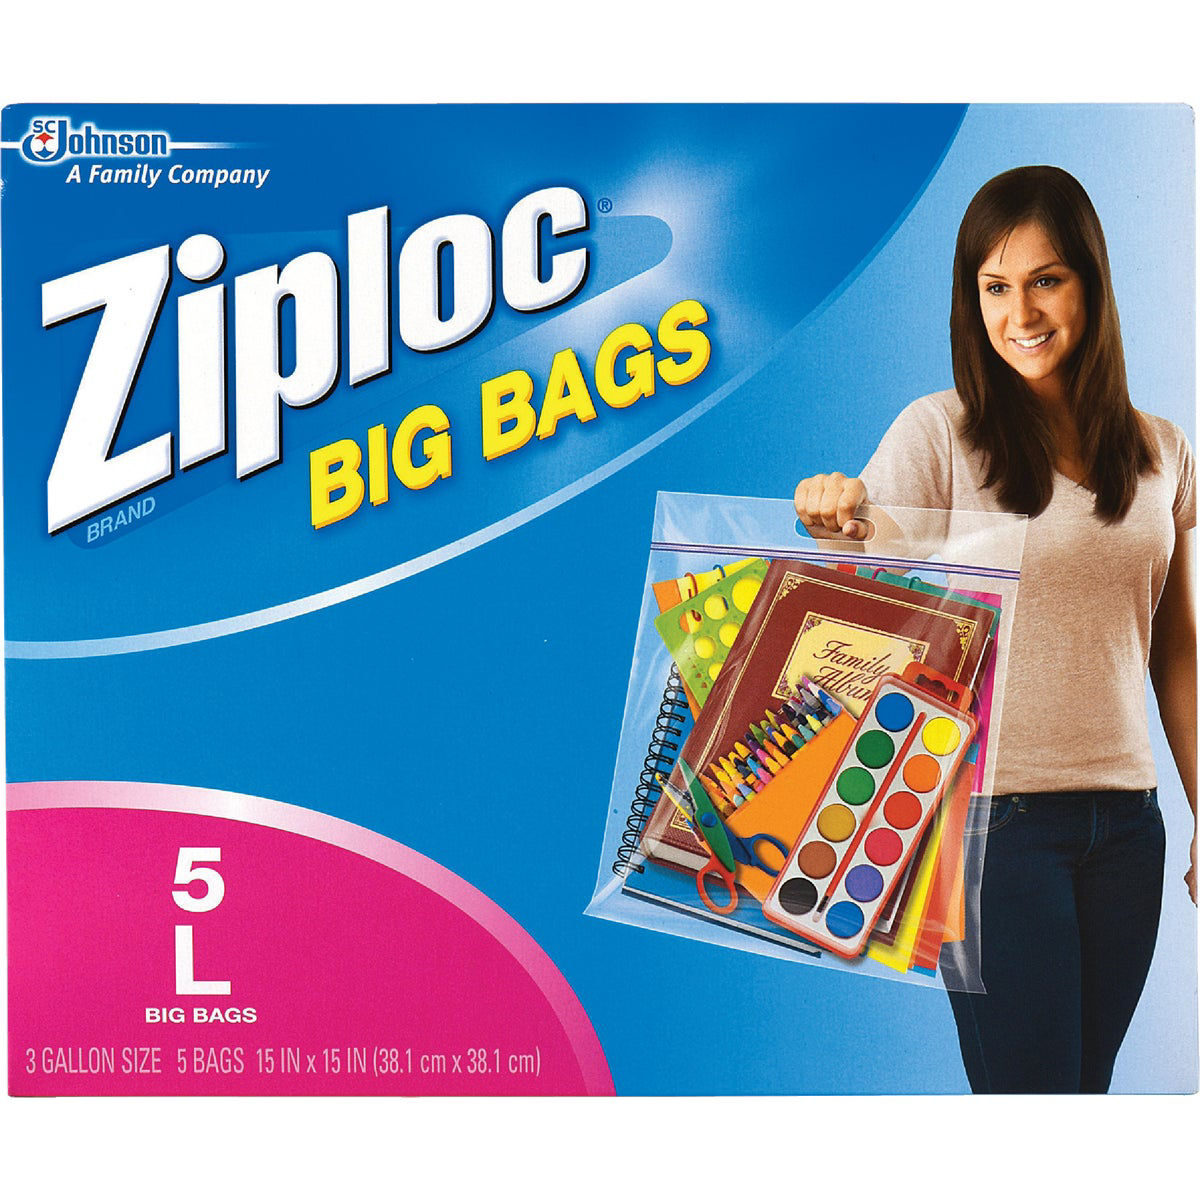 Ziploc Big Bag 3 Gallon Large Storage Bags, (5-Count) 71592 - Two boxes